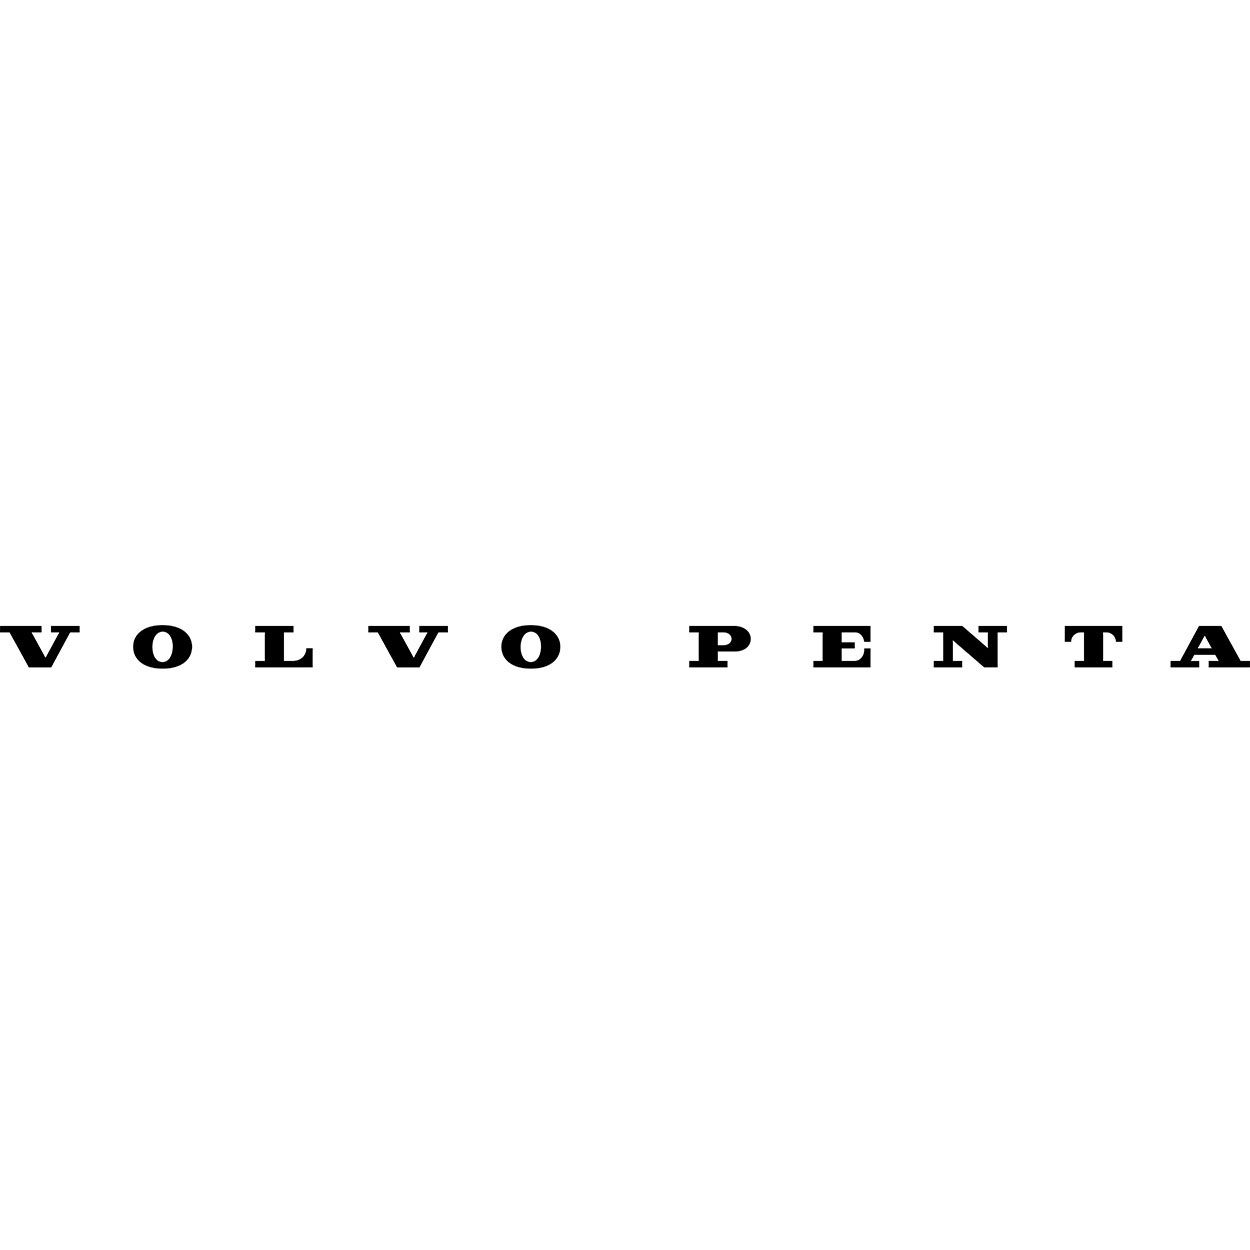 Volvo Penta Logo